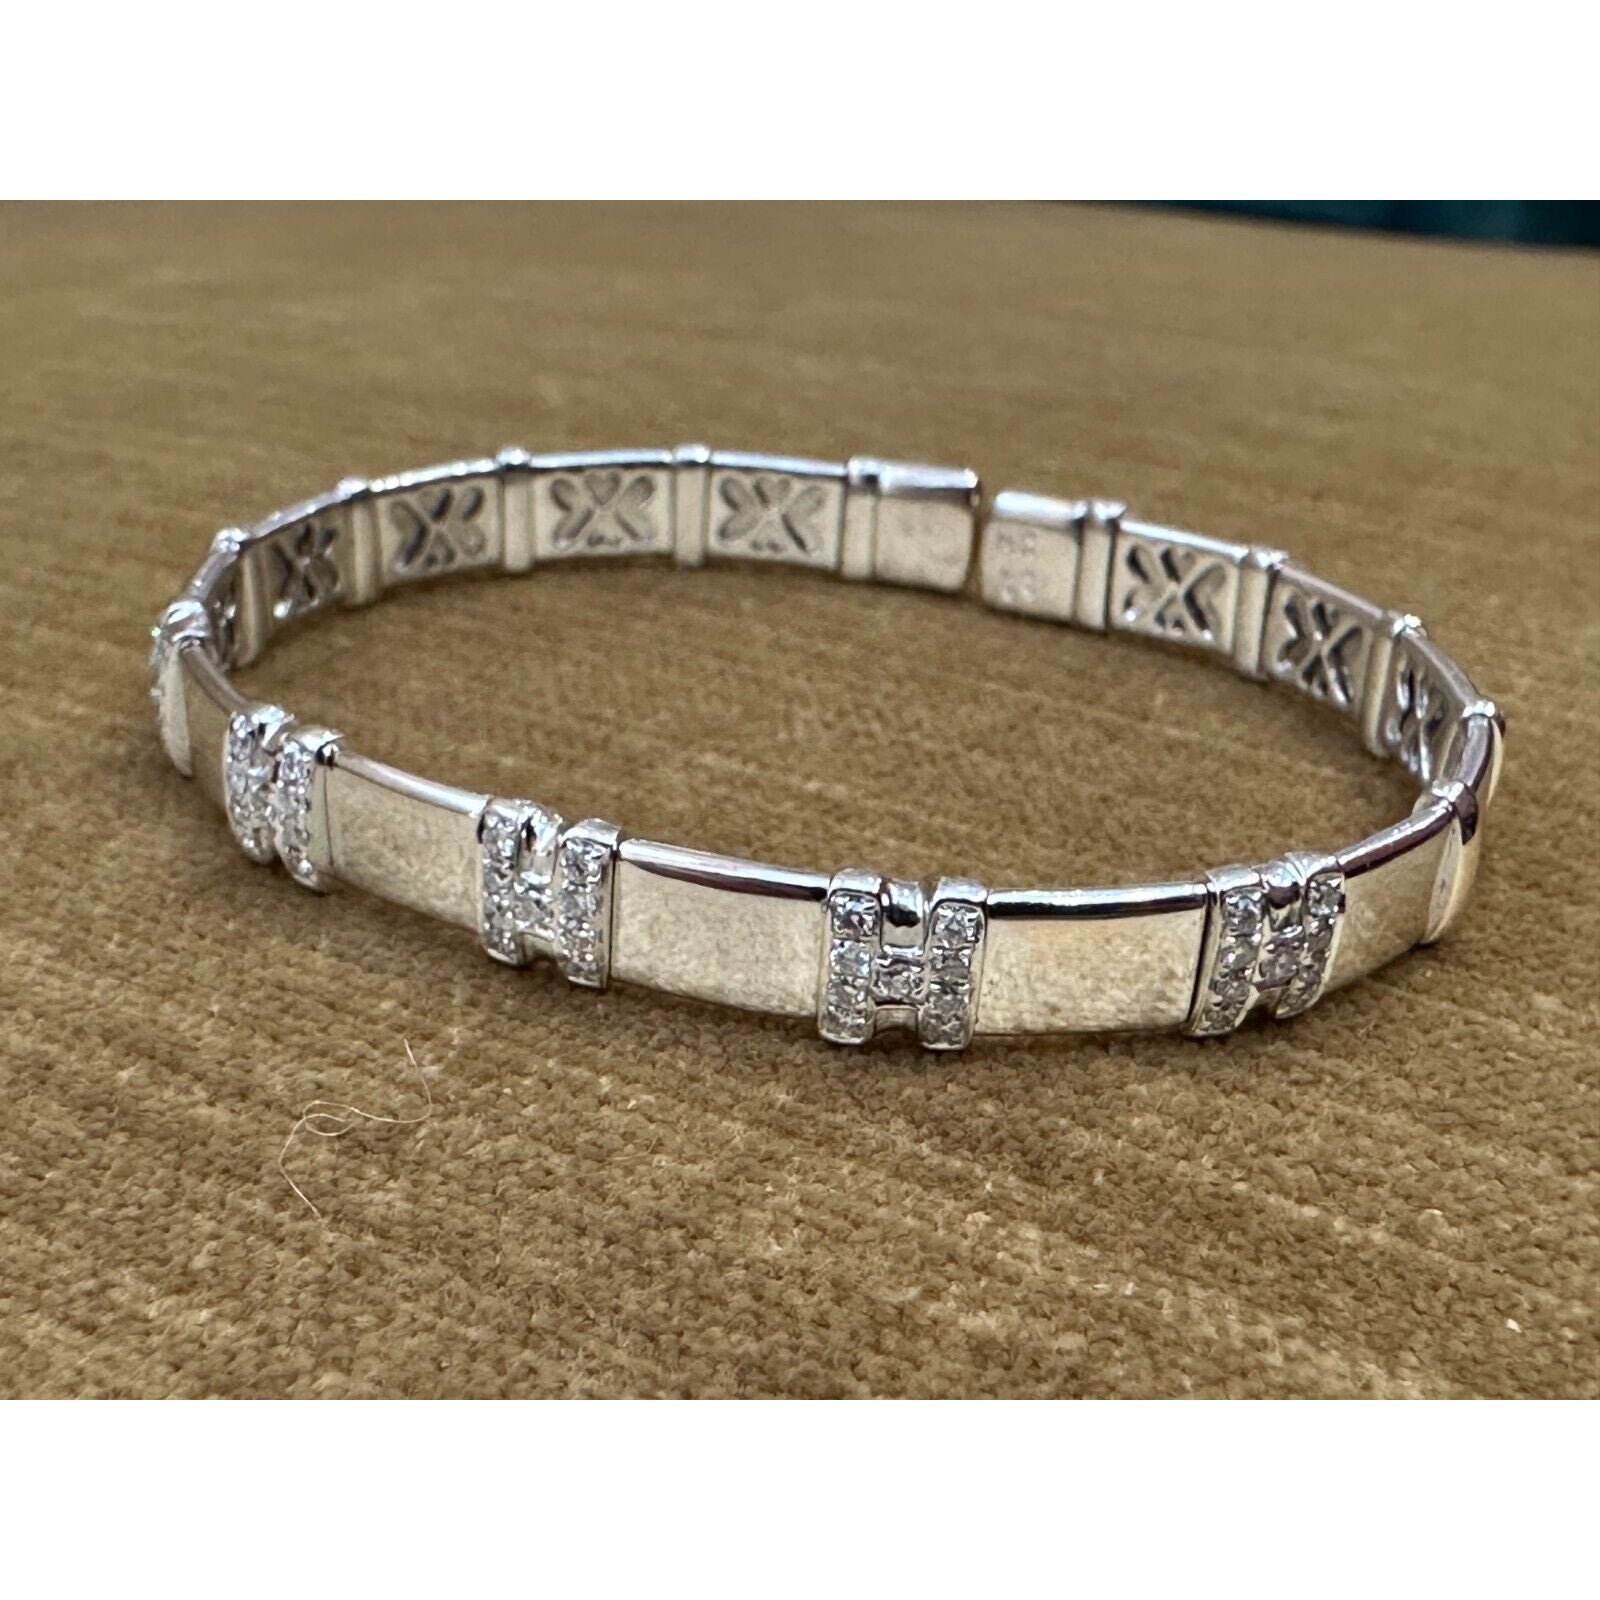 "H" Design Diamond Flexible Cuff Bracelet in 18k White Gold